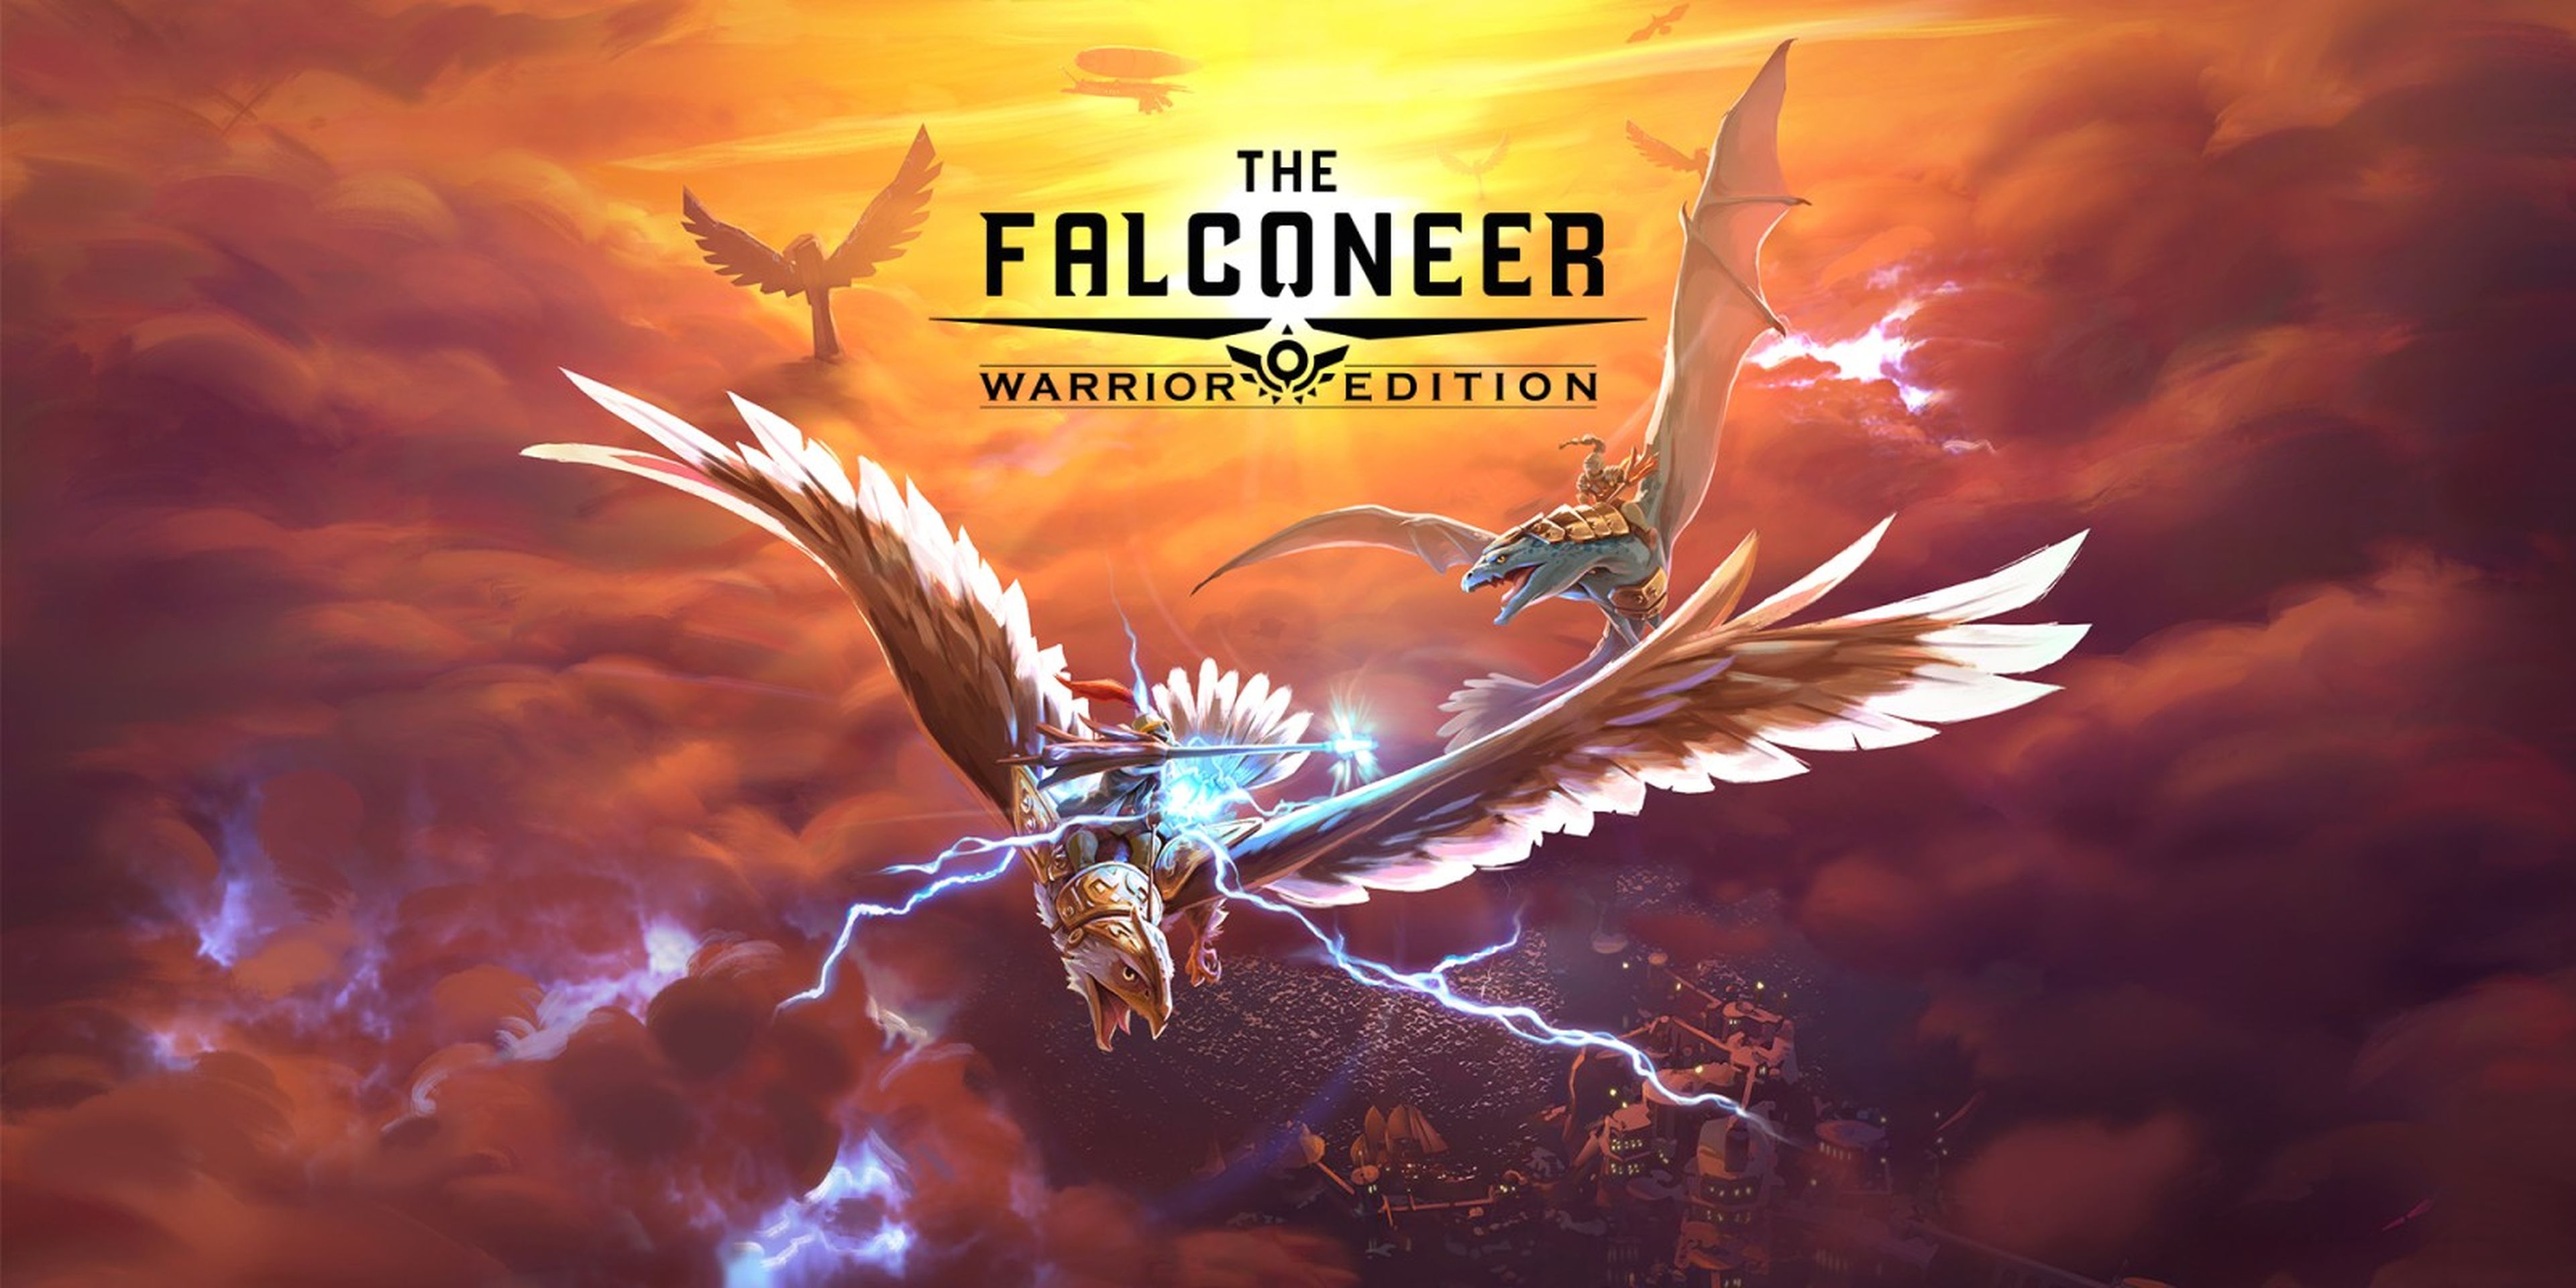 The Falconeer Warrior Edition